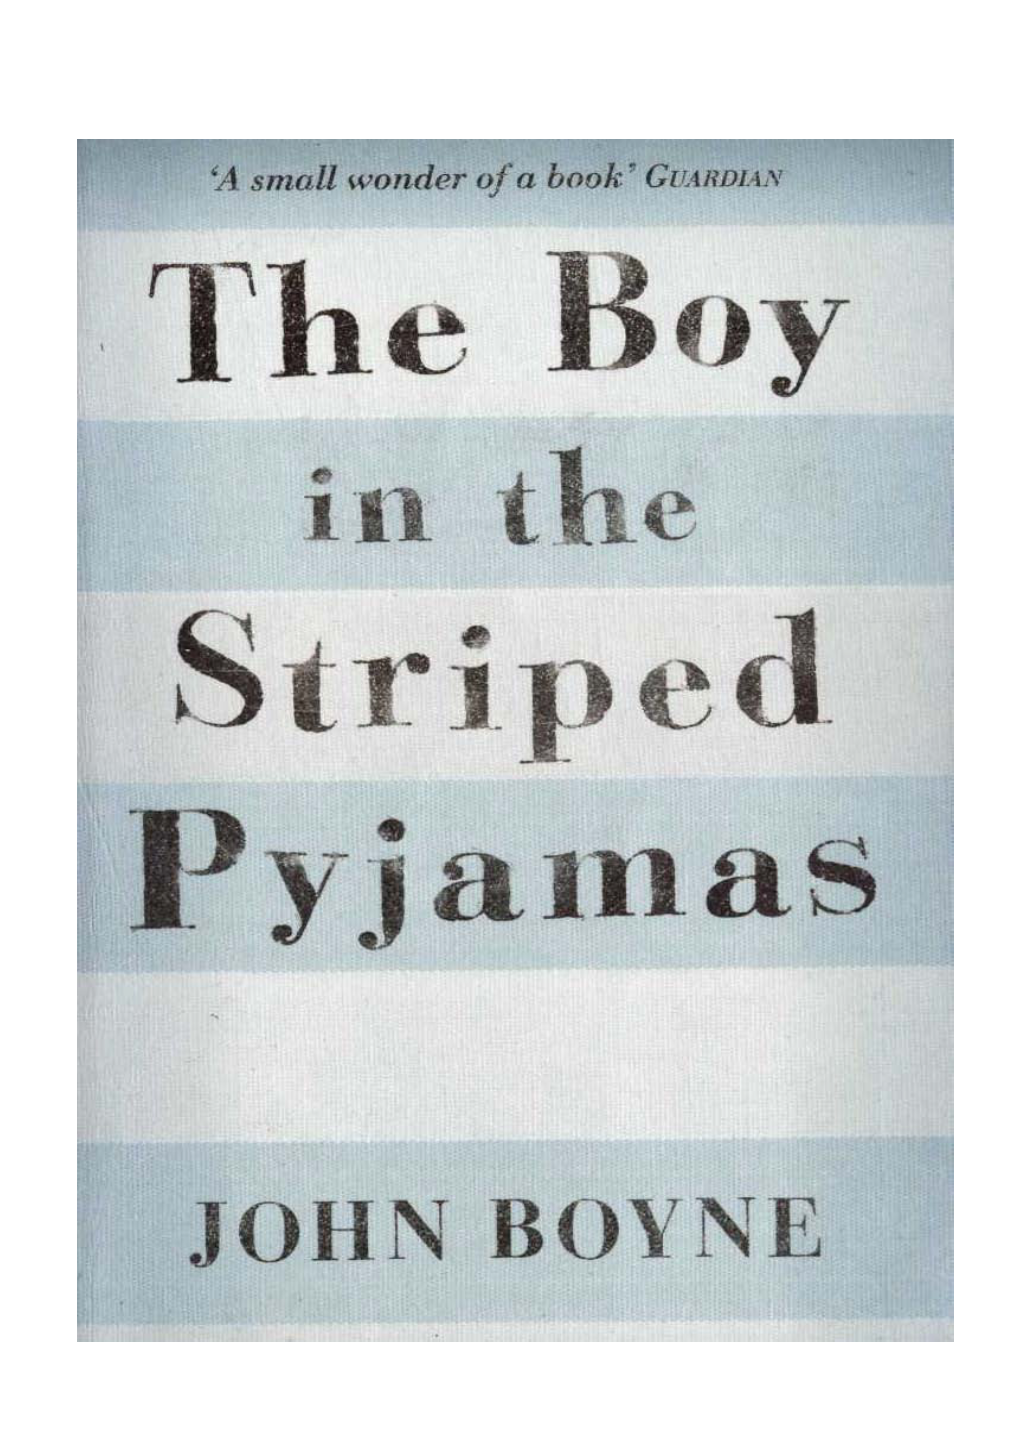 The Boy in the Striped Pyjamas by John Boyne Published: David Fickling Books ISBN: 978-1-849-92043-8